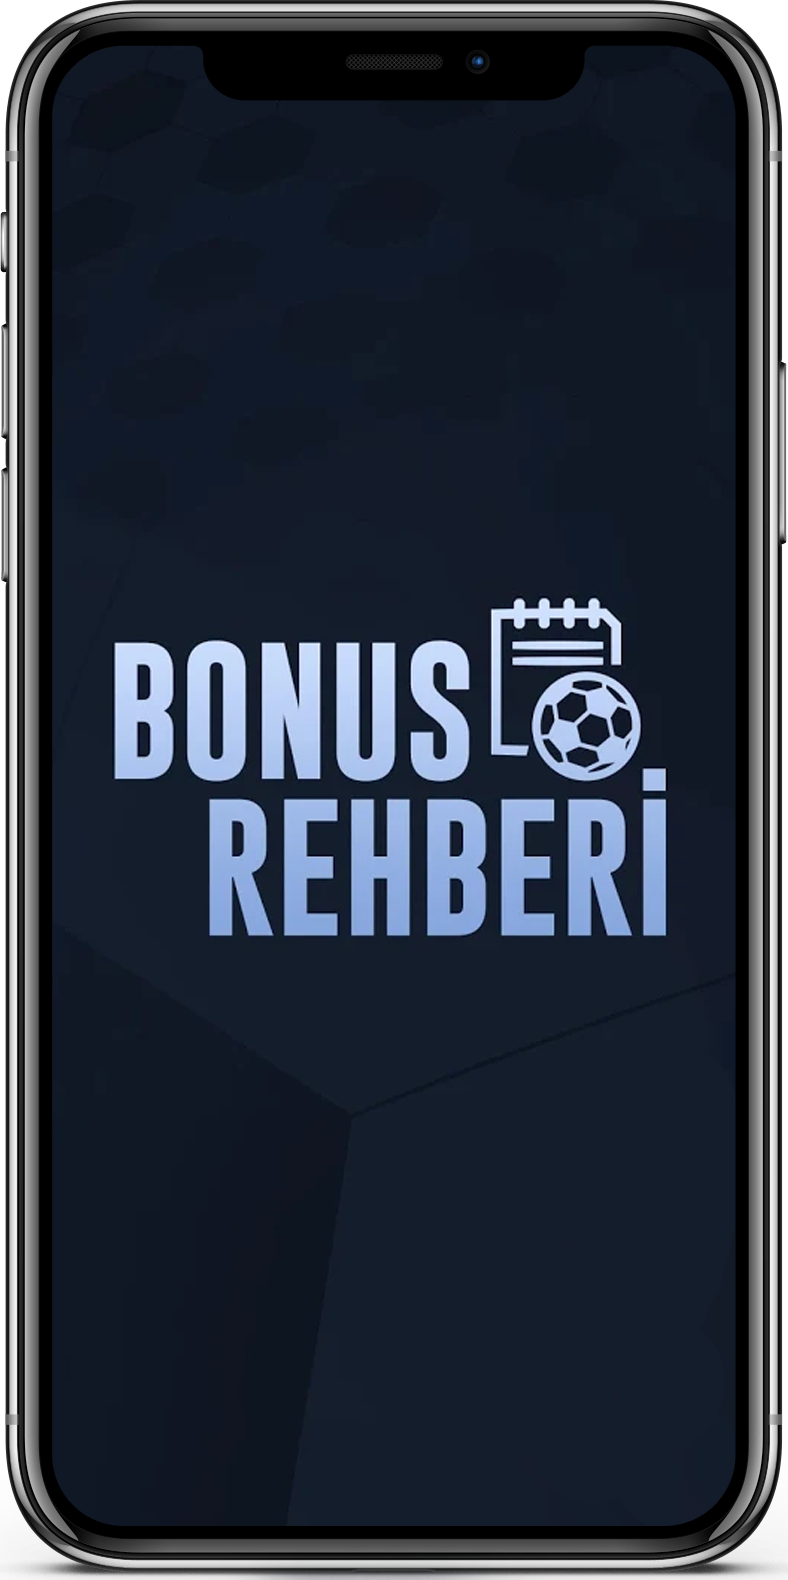 Bonus Rehberi